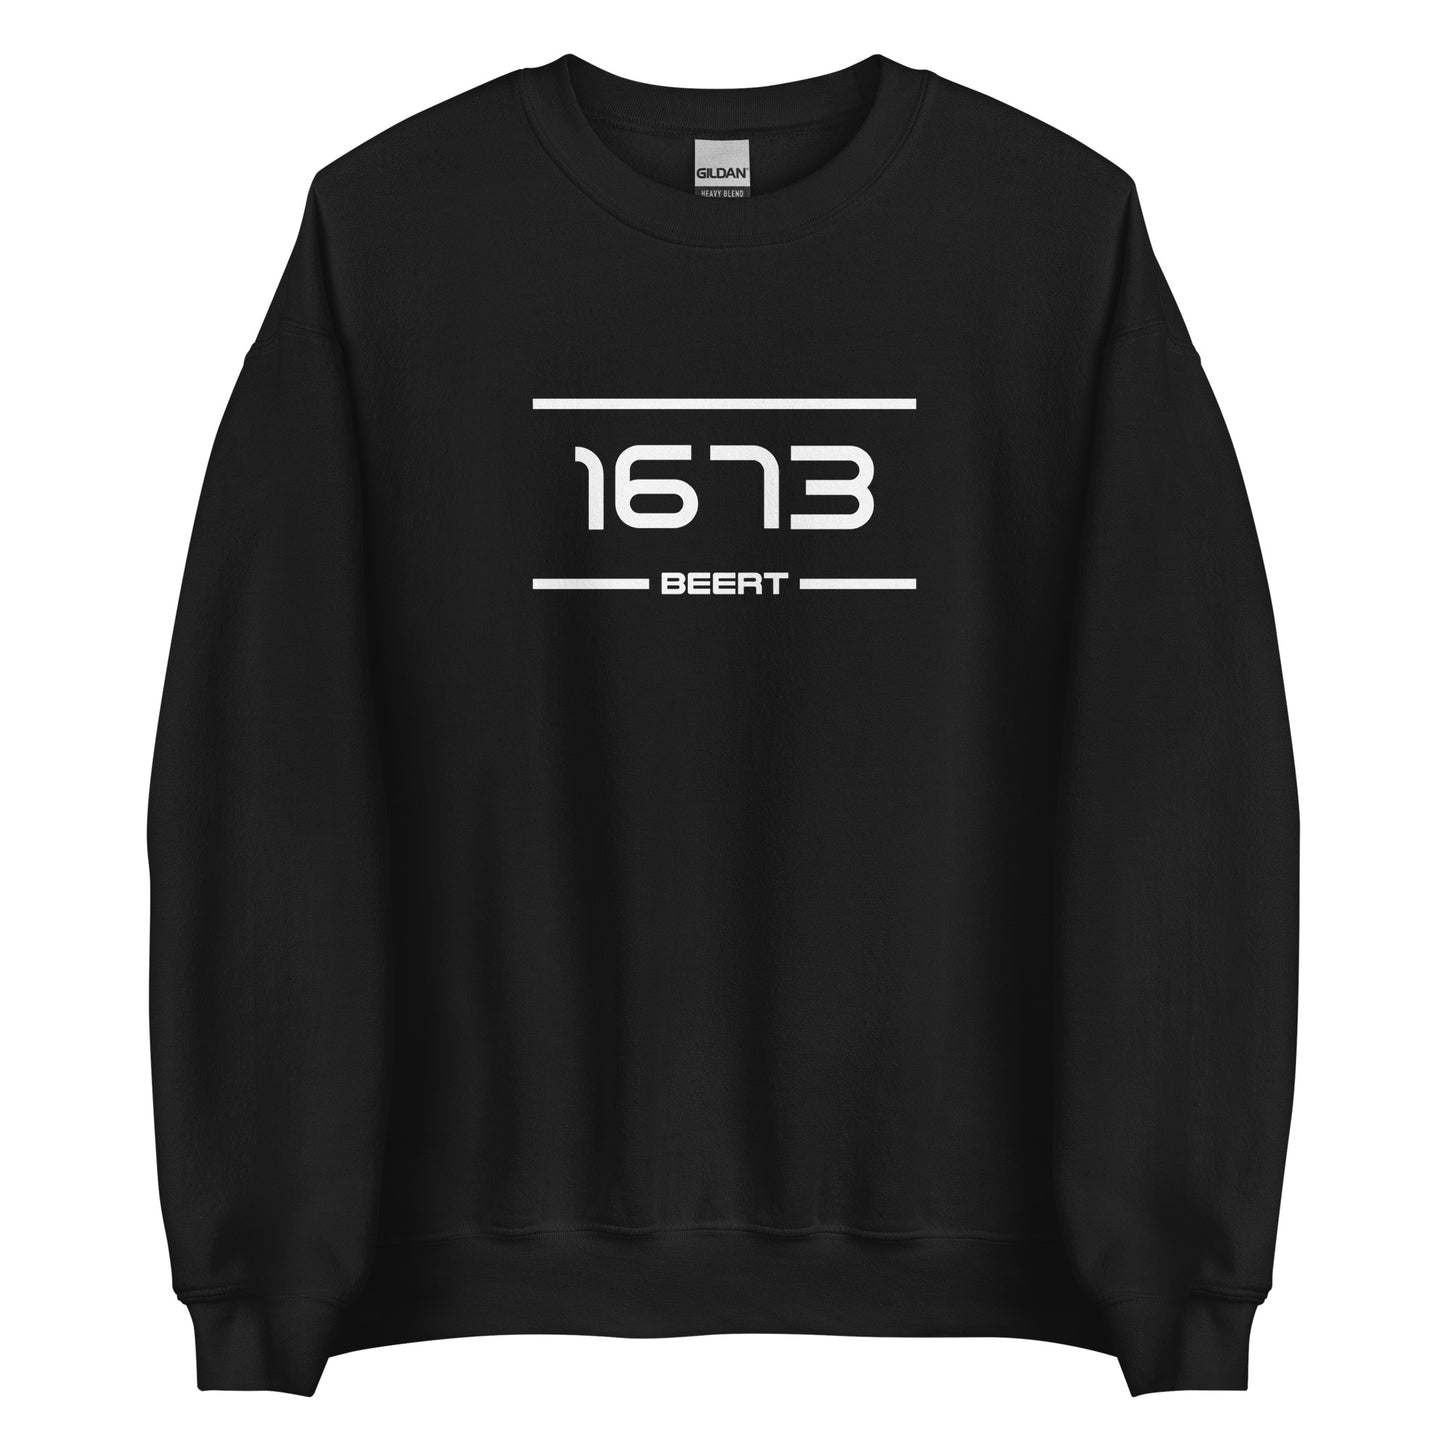 Sweater - 1673 - Beert (M/V)